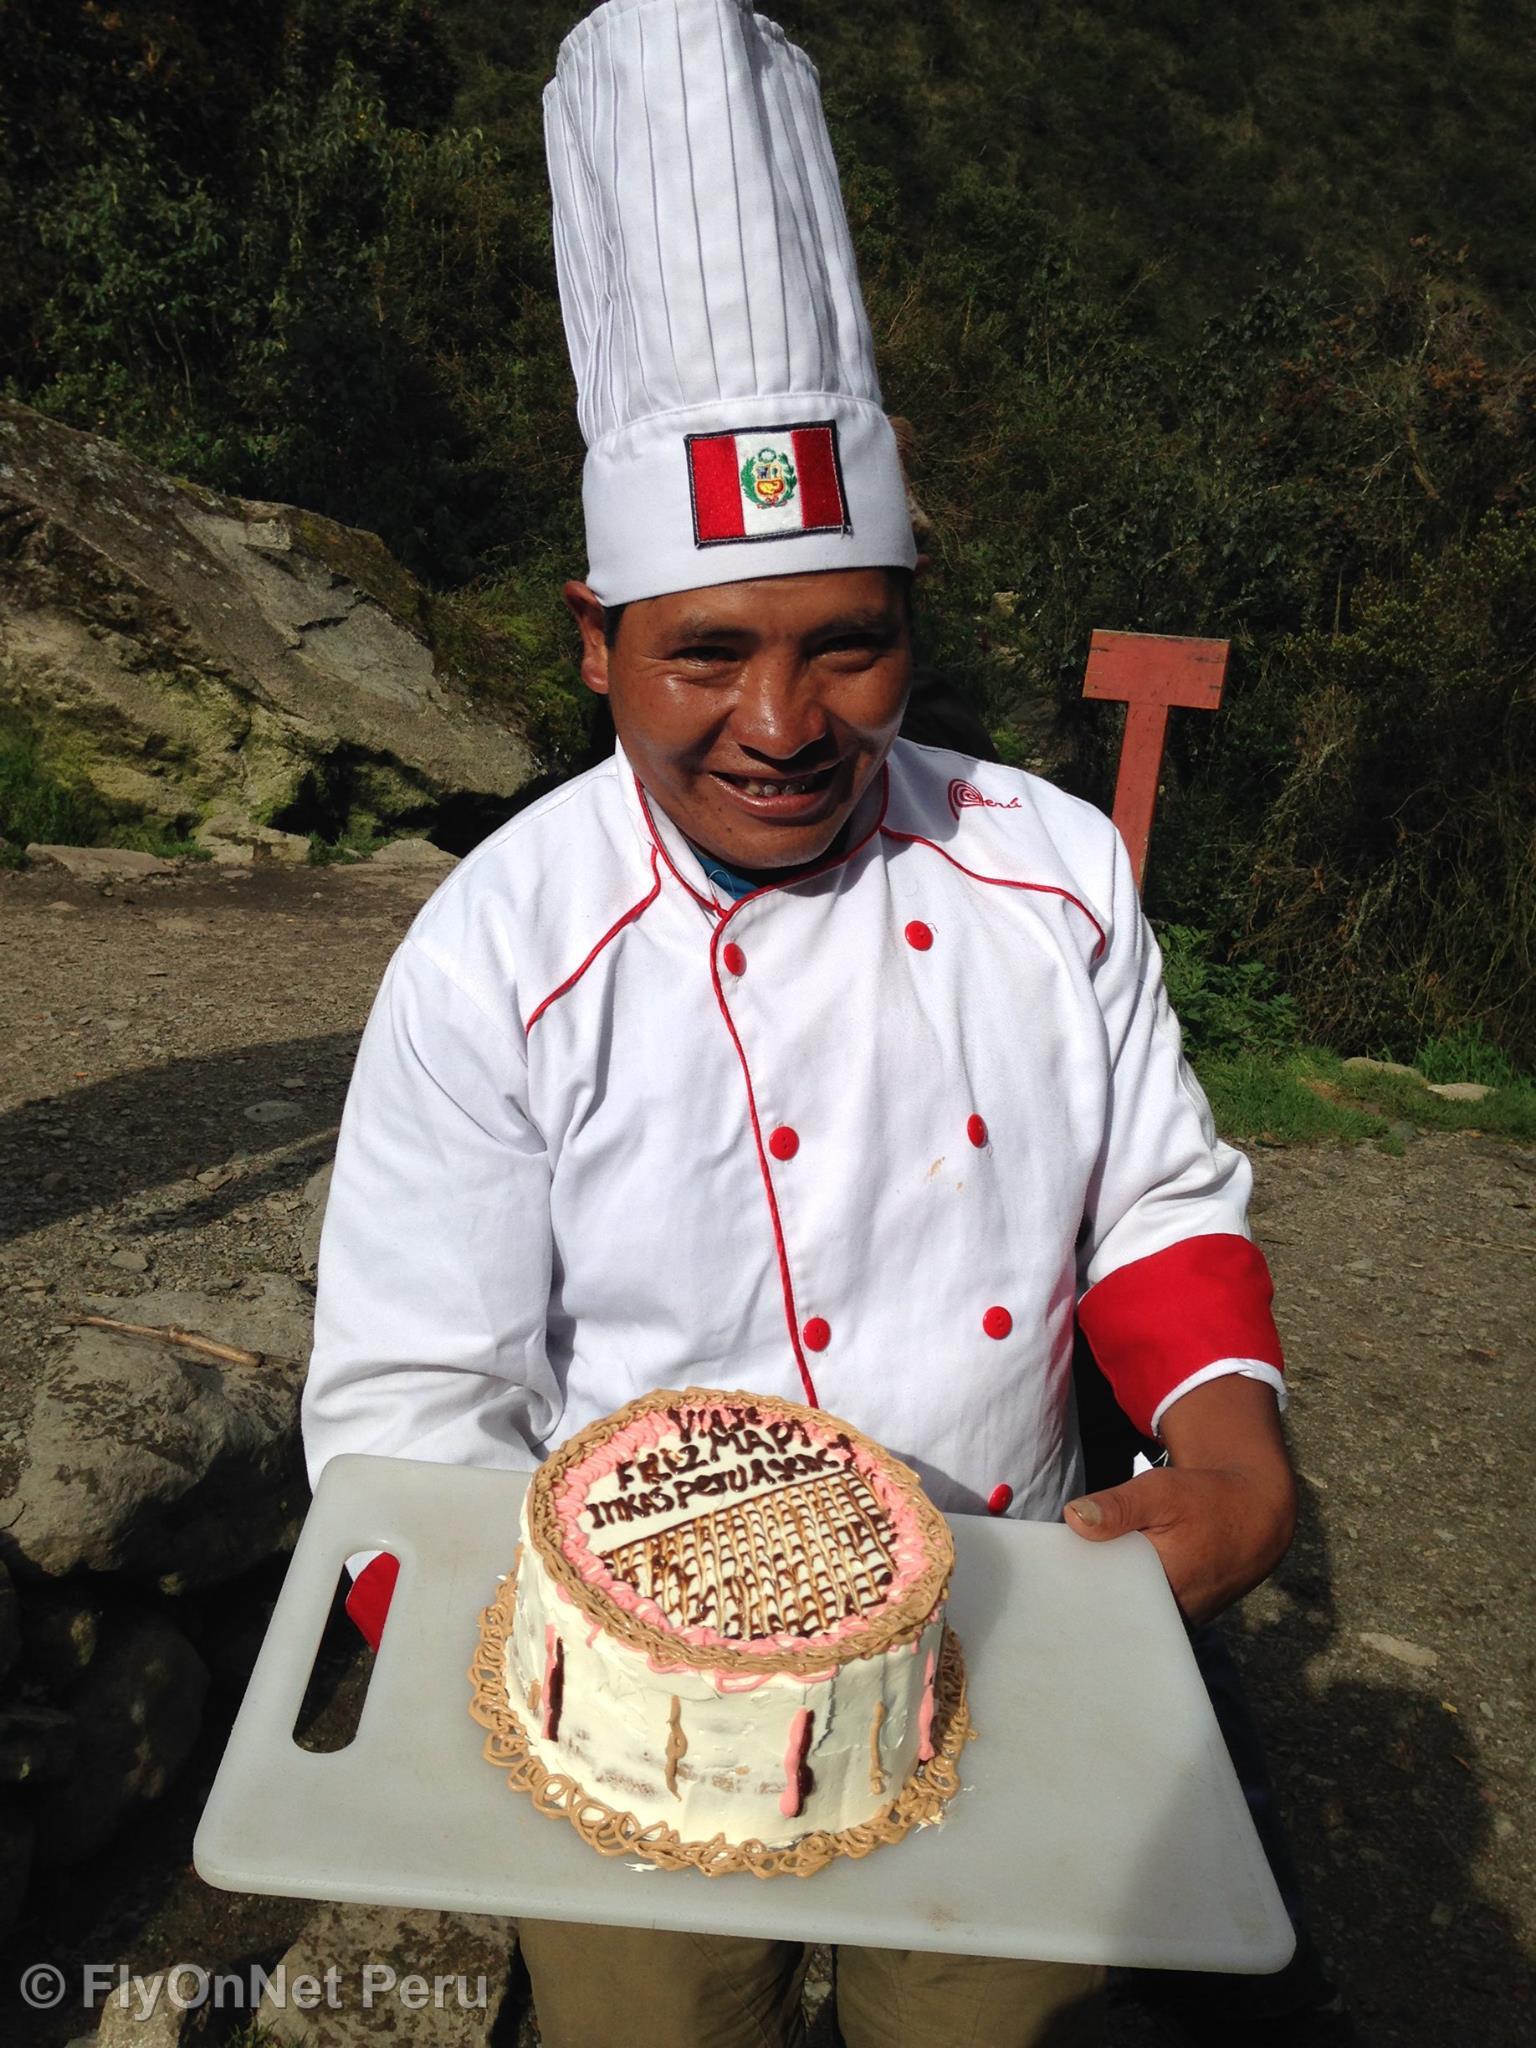 Photo Album: Our cook baking a cake, Inca Trail